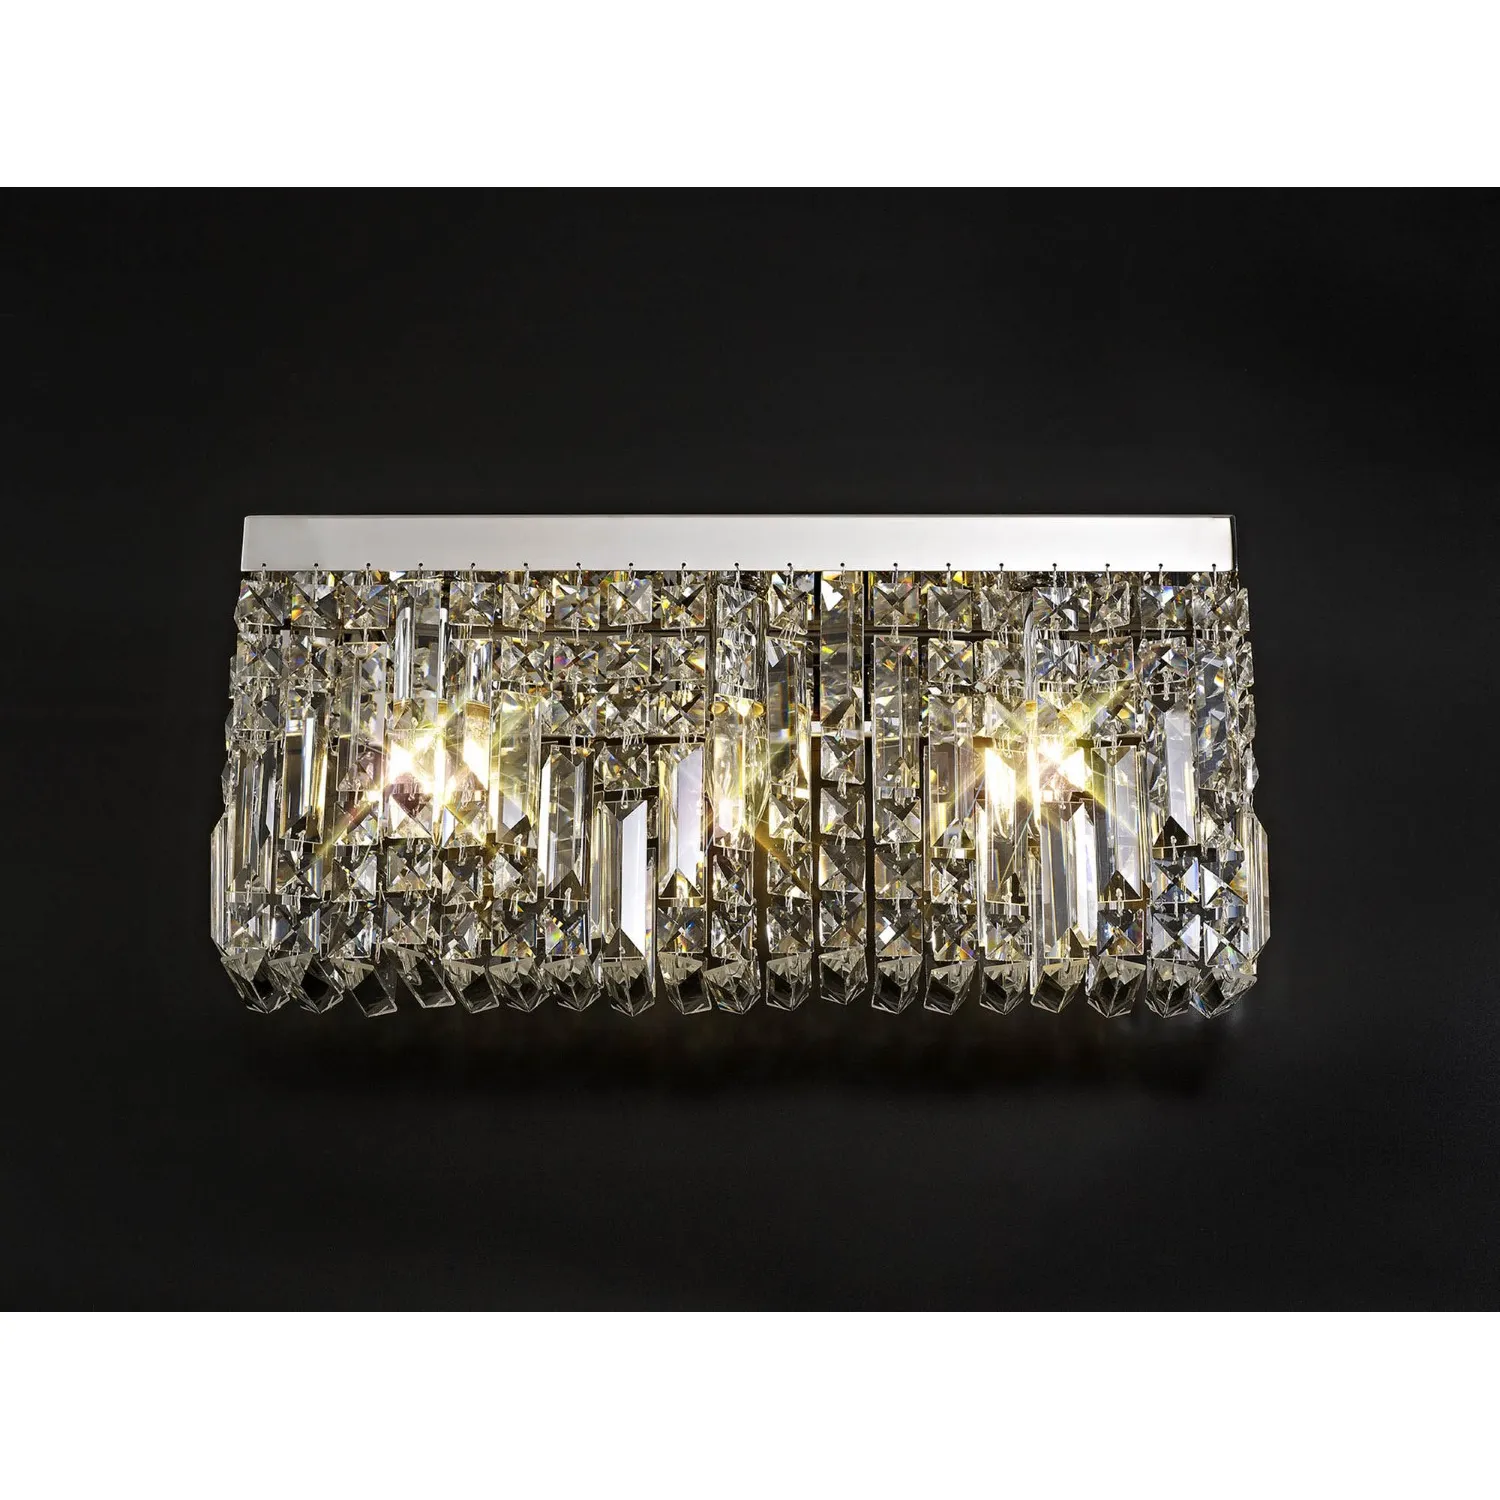 Boreham 50x24cm Rectangular Large Wall Lamp, 3 Light E14, Polished Chrome Crystal